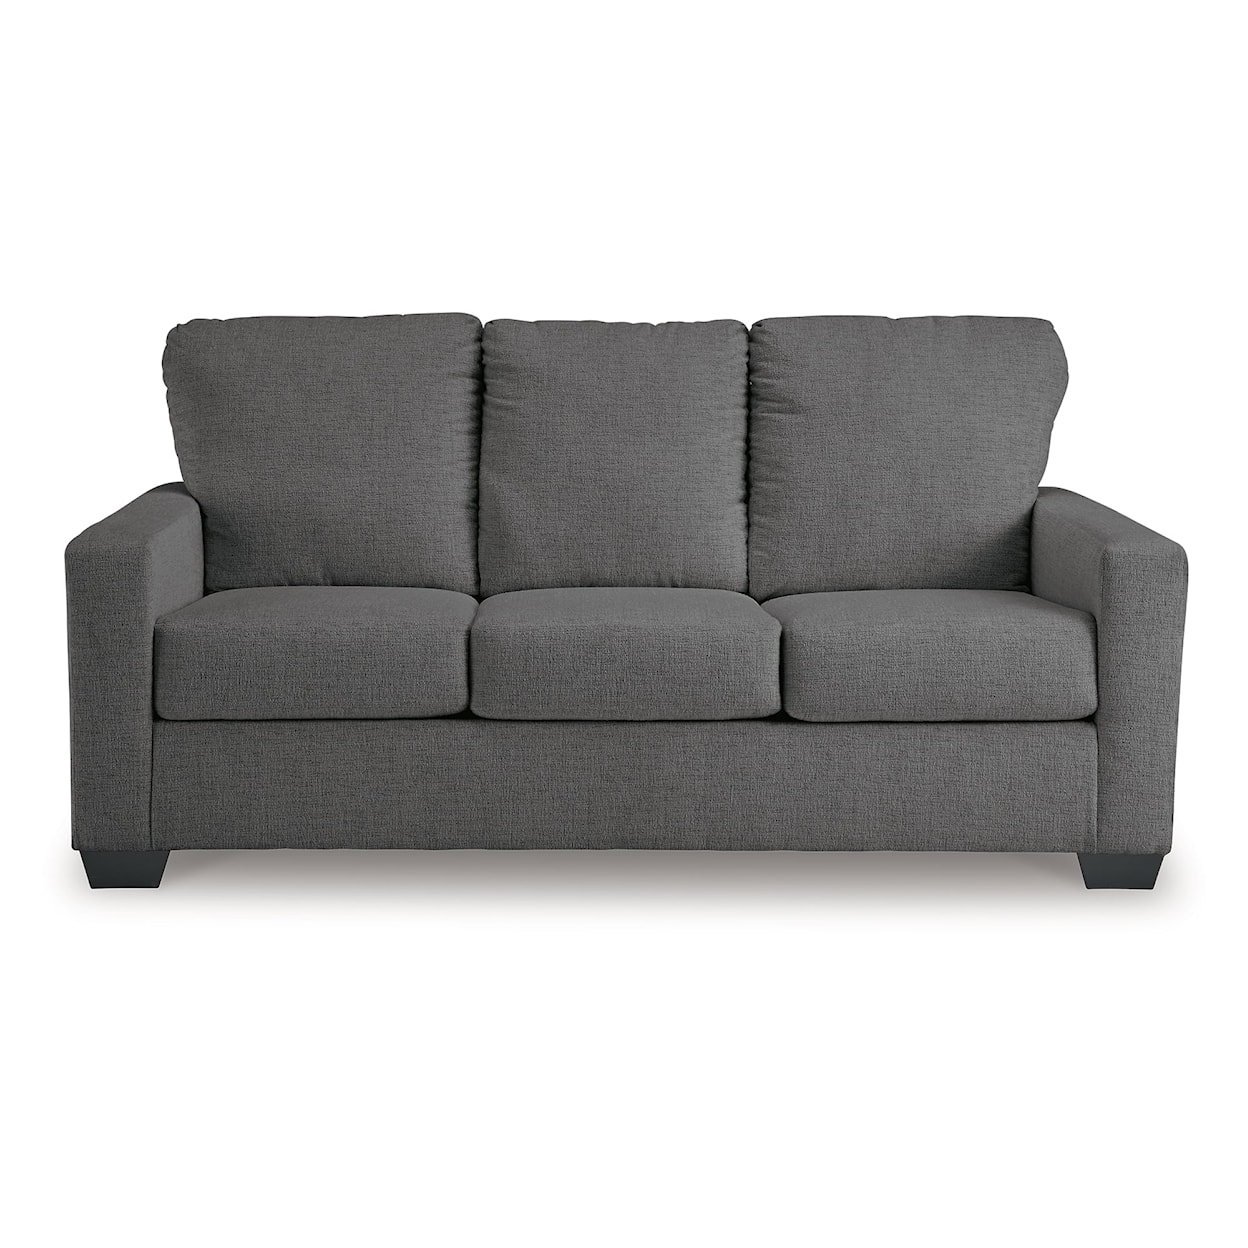 Ashley Furniture Signature Design Rannis Full Sleeper Sofa